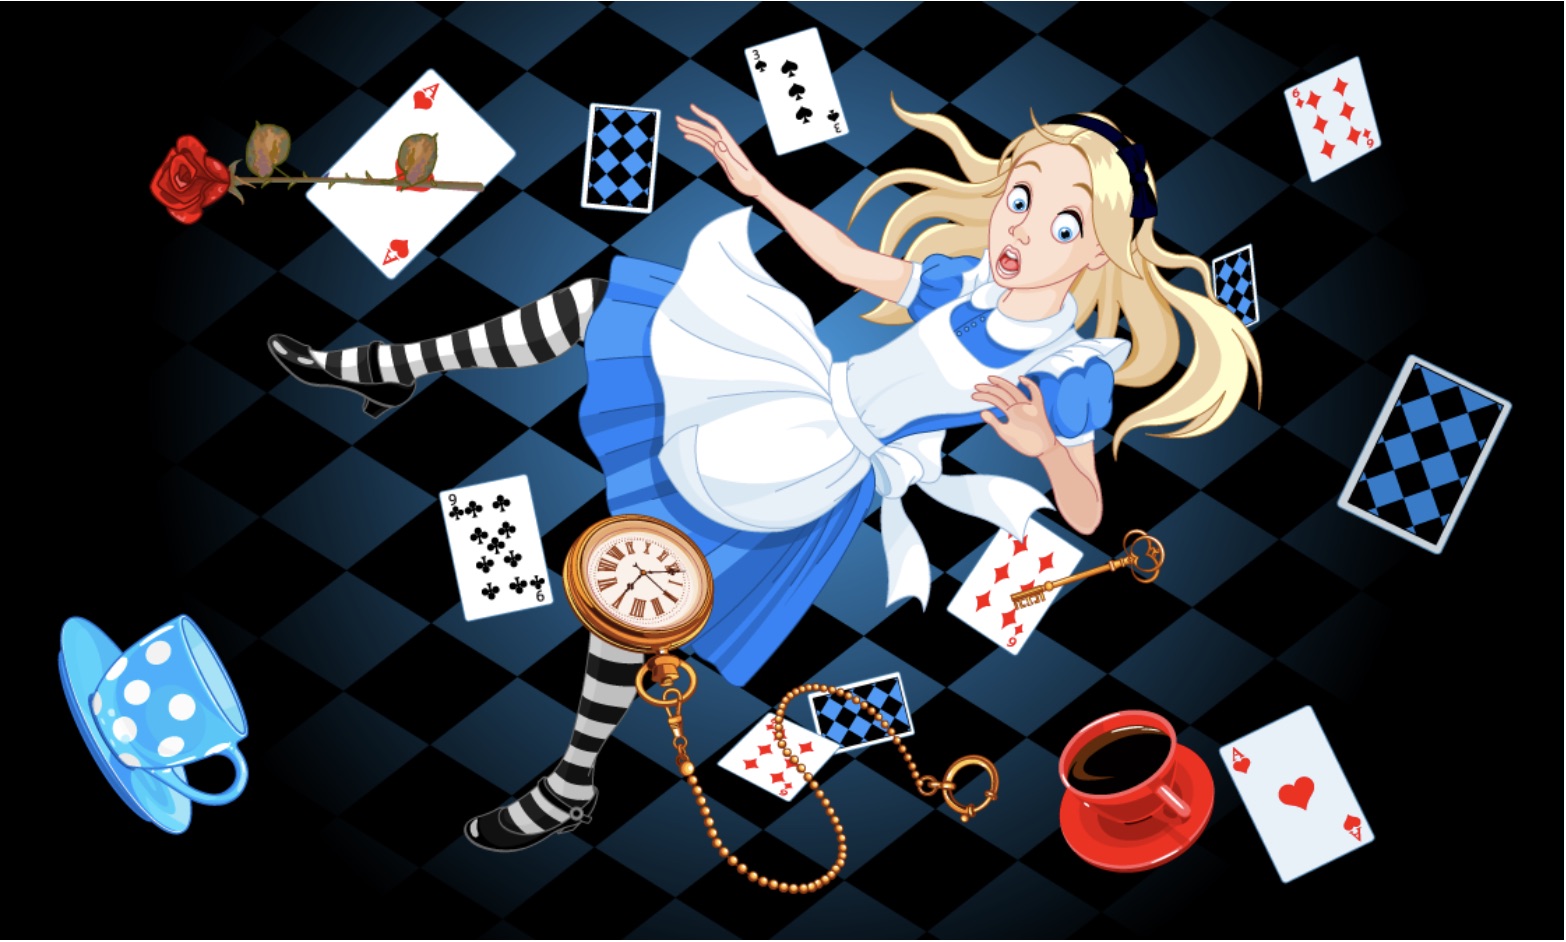 Rabbit hole by deco 27. Алиса в стране чудес. Алиса в стране чудес Алиса. Кэрролл Льюис "Алиса в стране чудес". Алиса в стране чудес персонажи иллюстрации.